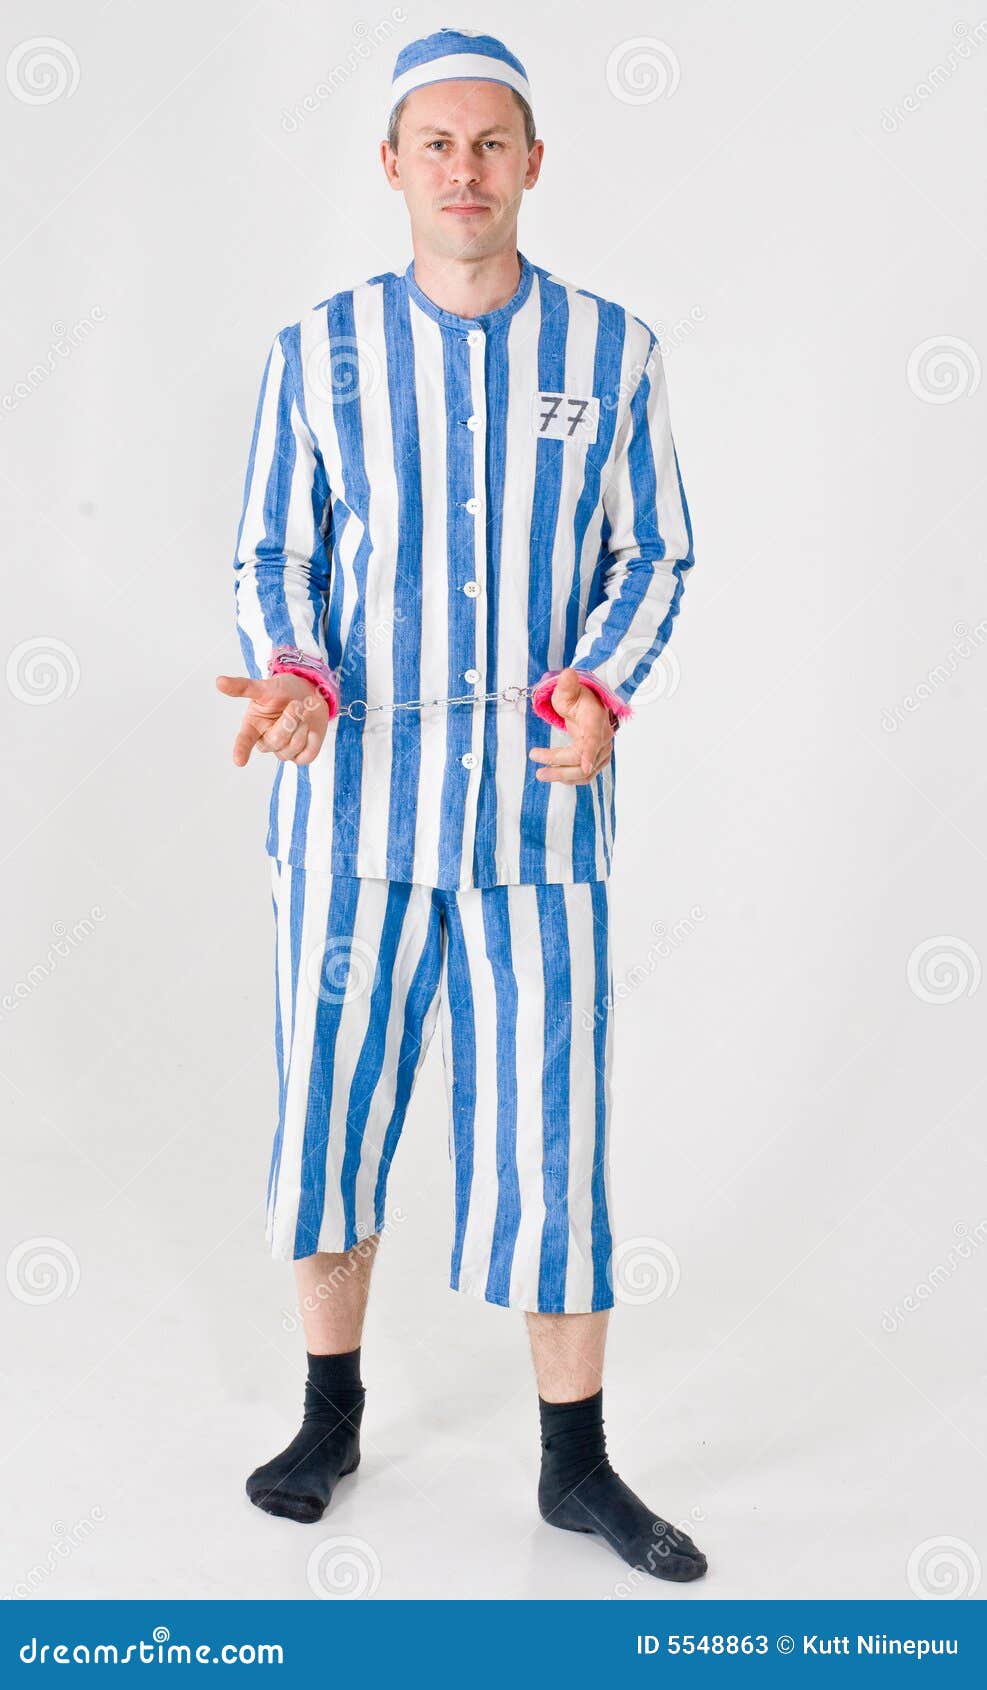 199 Male Prisoner Costume Stock Photos - Free & Royalty-Free Stock